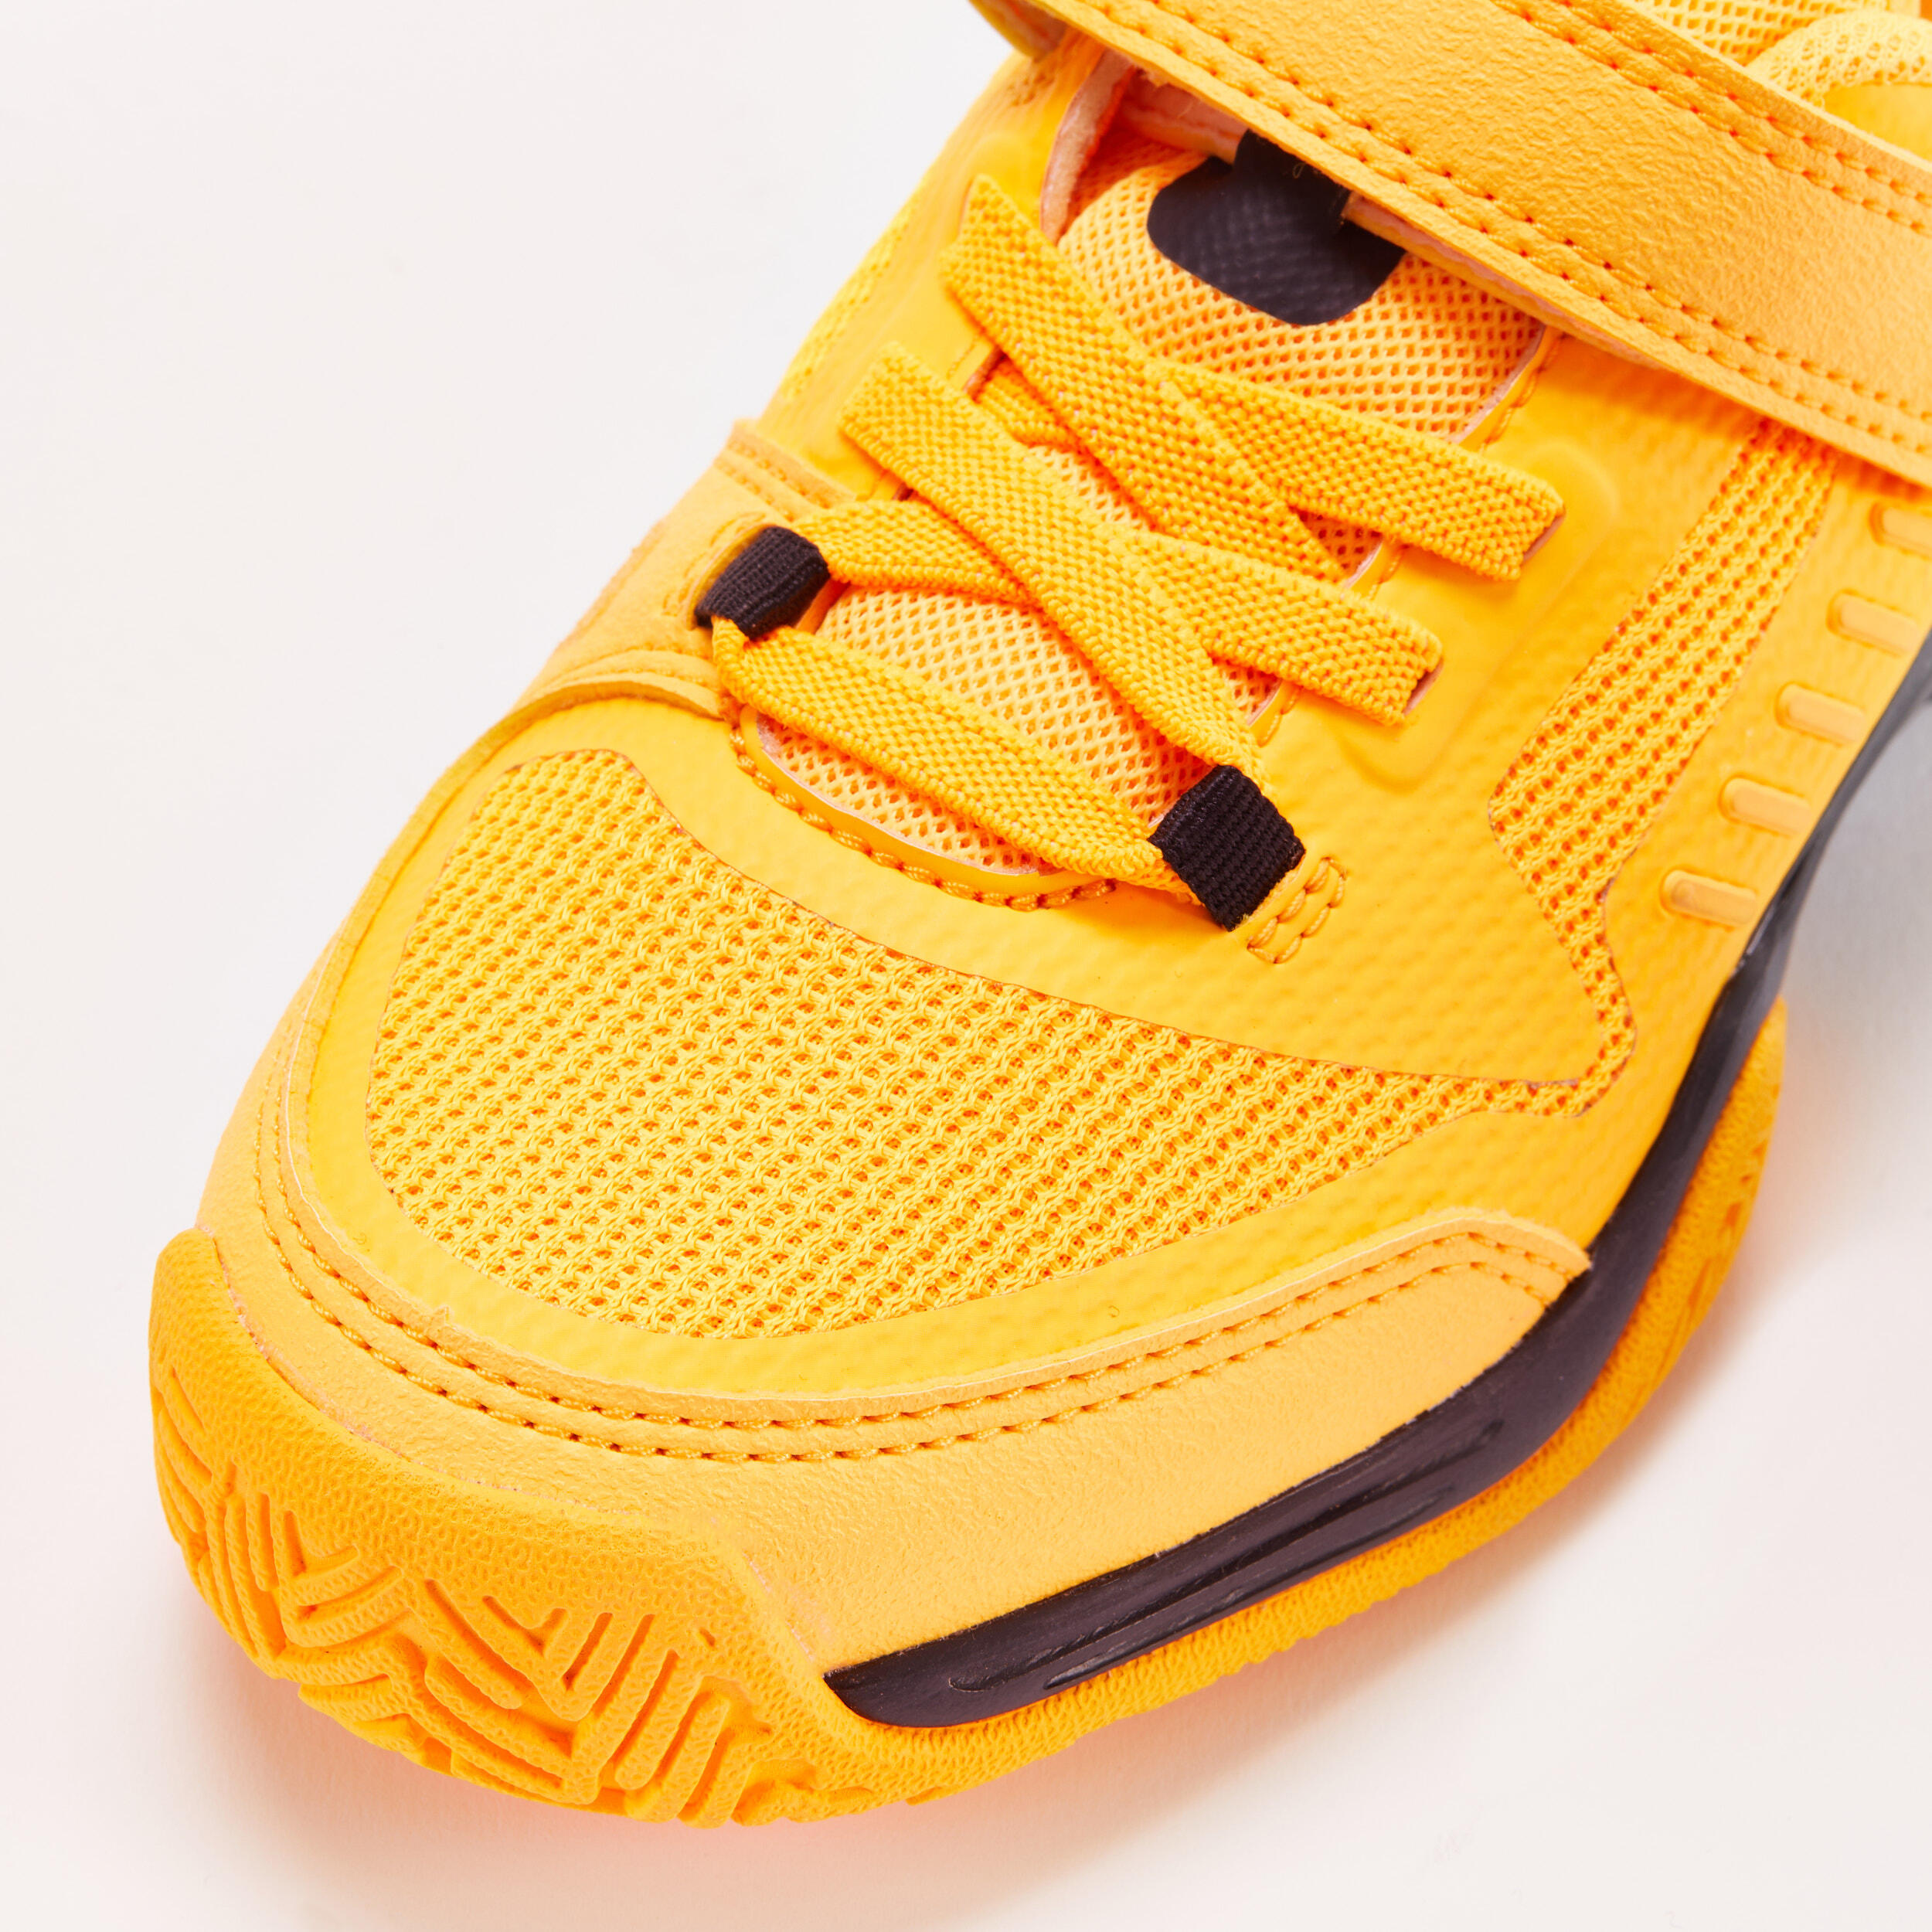 Kids' Rip-Tab Tennis Shoes TS500 Fast KD - Sunfire 8/9